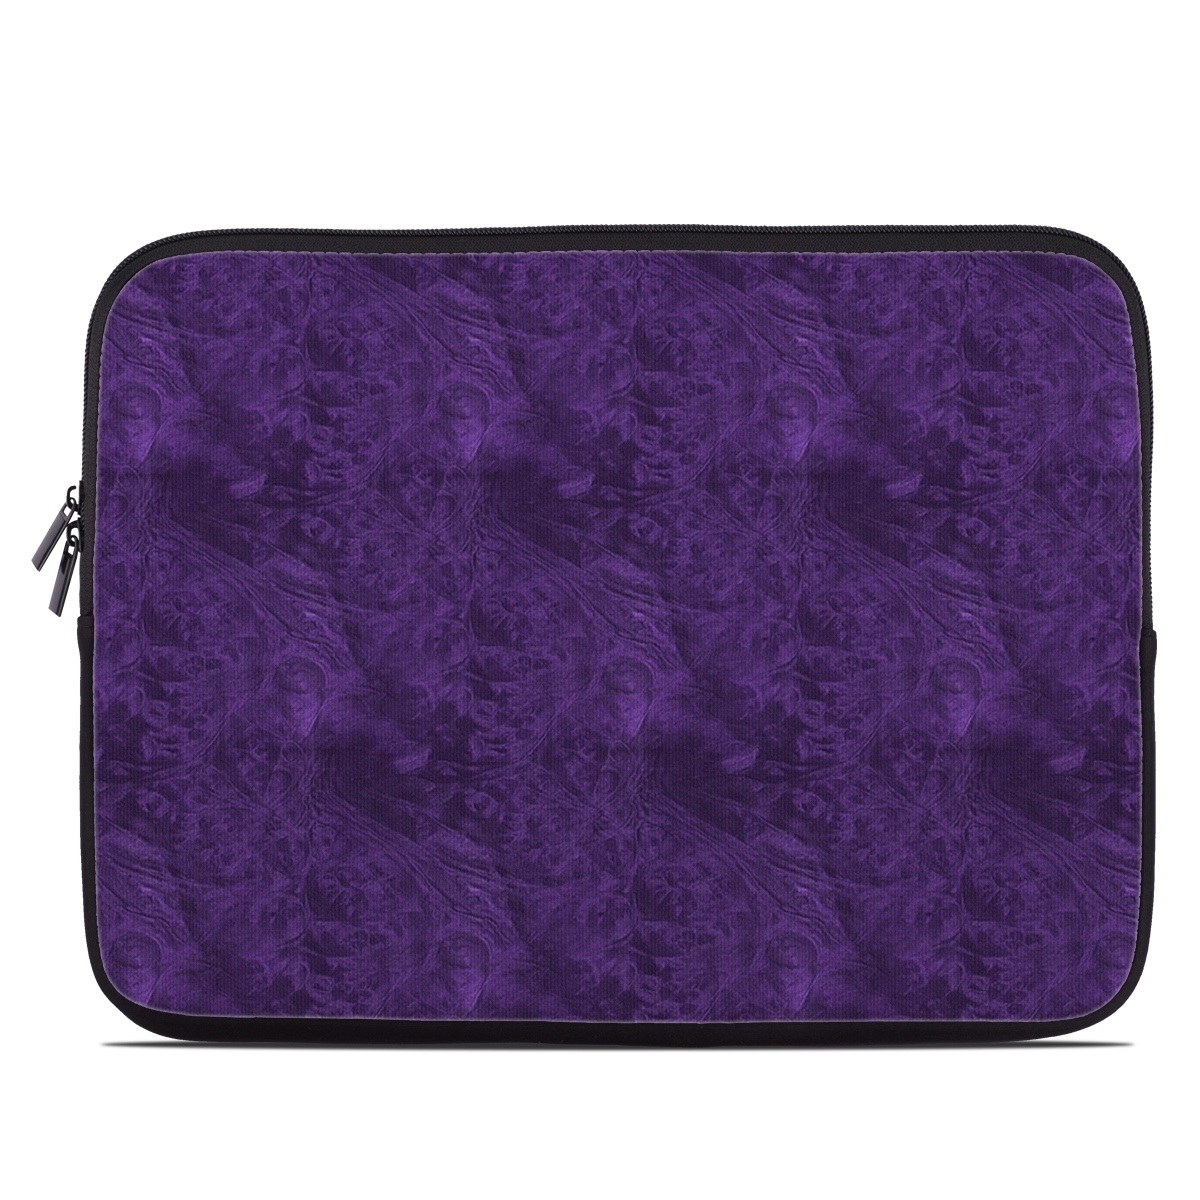 Laptop Sleeve - Purple Lacquer (Image 1)